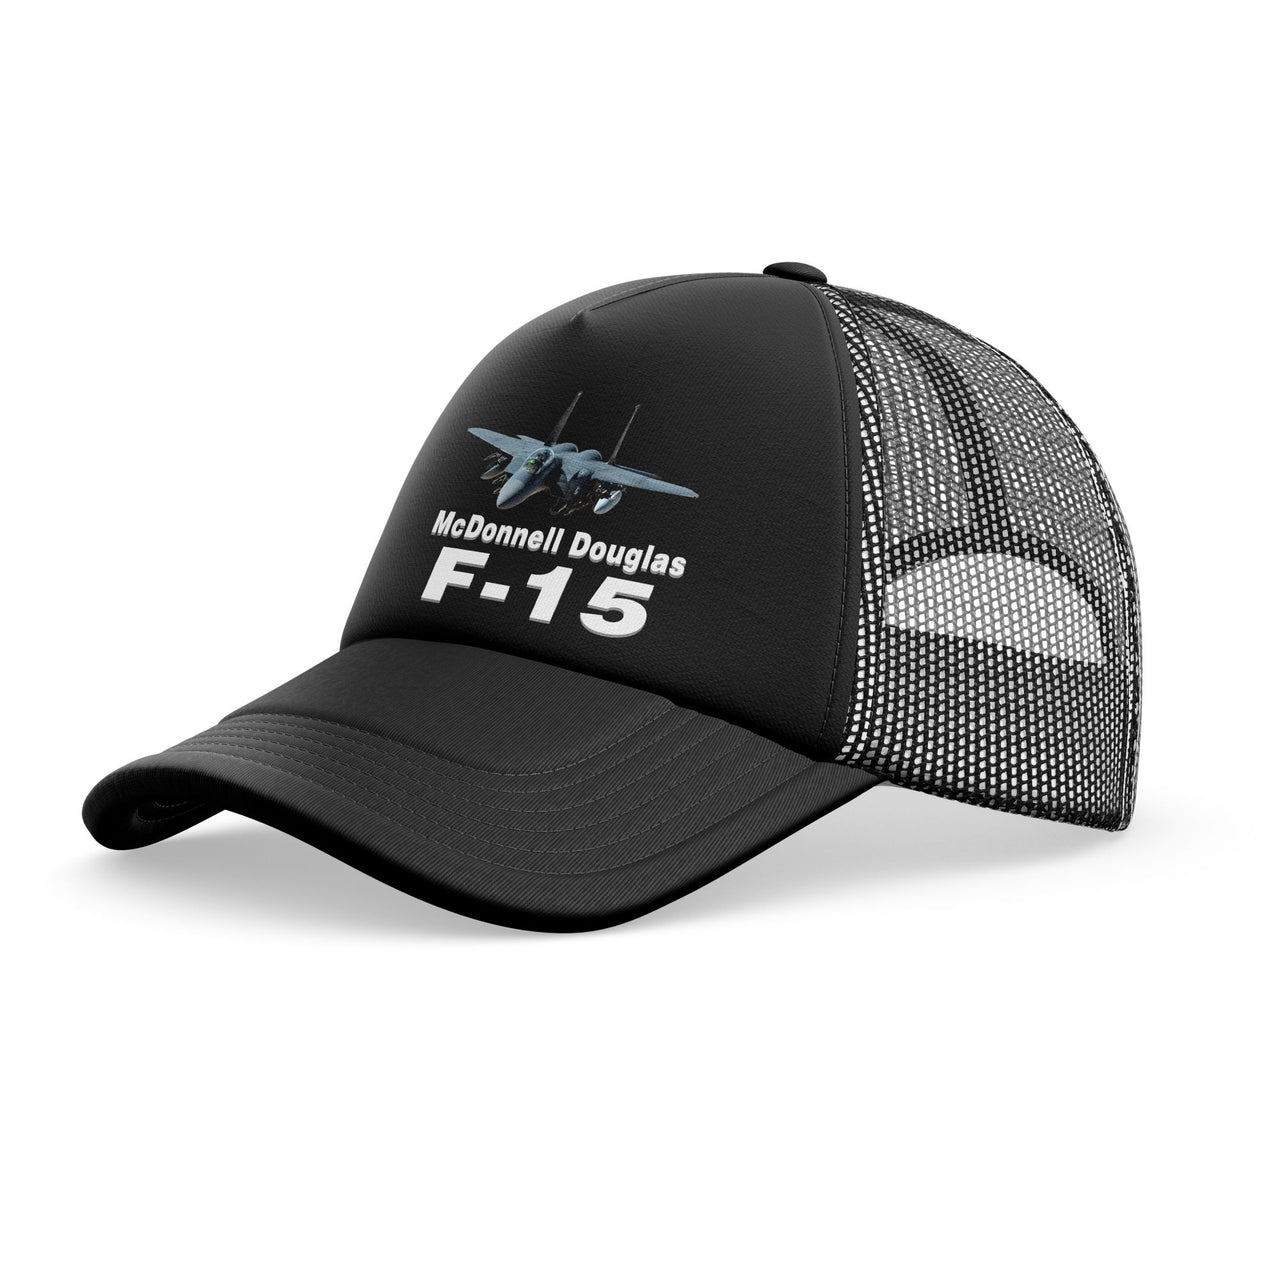 The McDonnell Douglas F15 Designed Trucker Caps & Hats